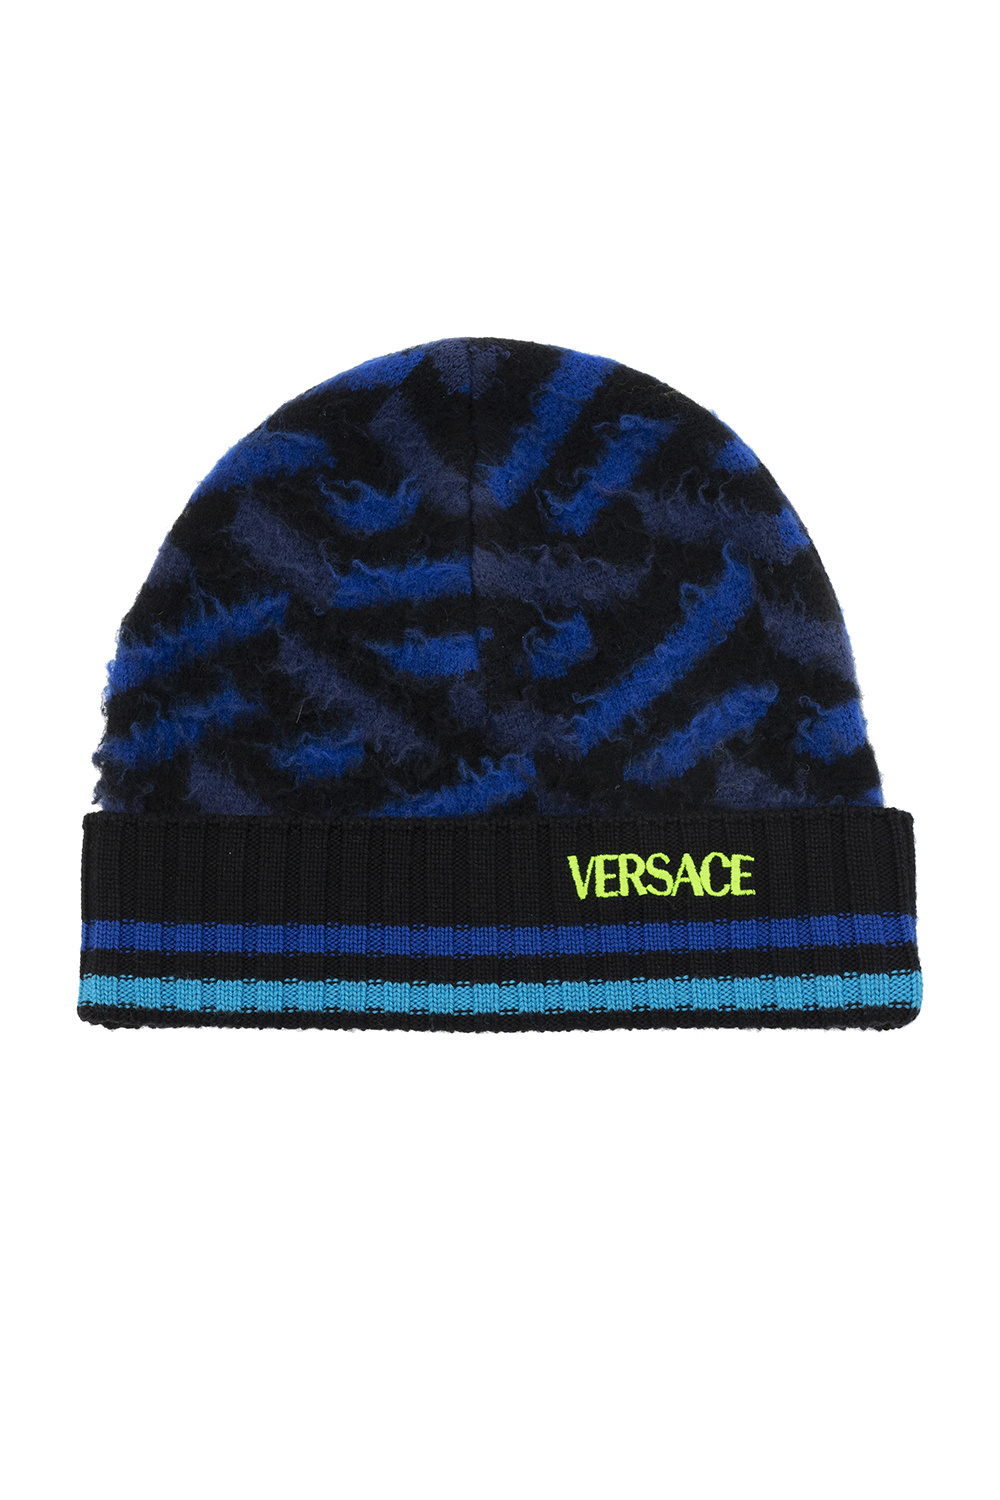 Versace hat adjustable with logo